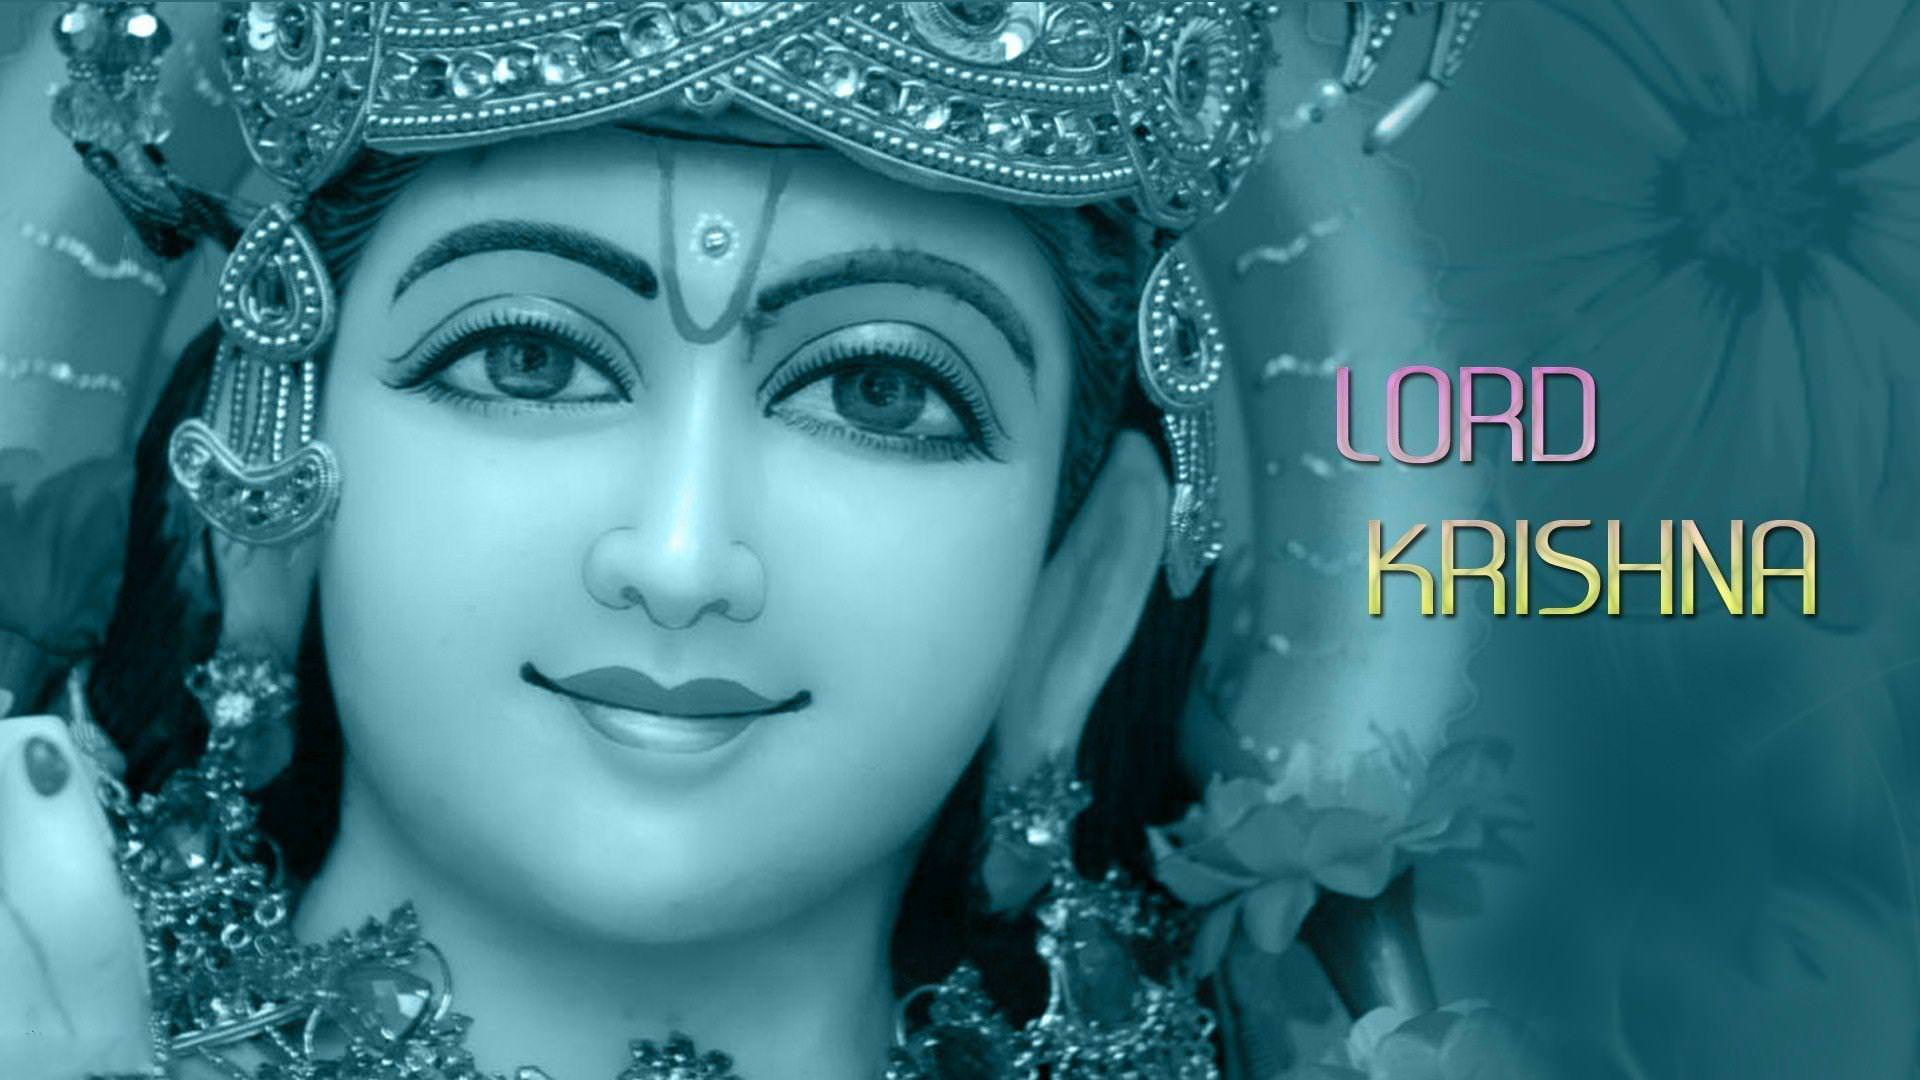 Download Lord Krishna Full HD 5K 2020 Images Photos Download Wallpaper -  